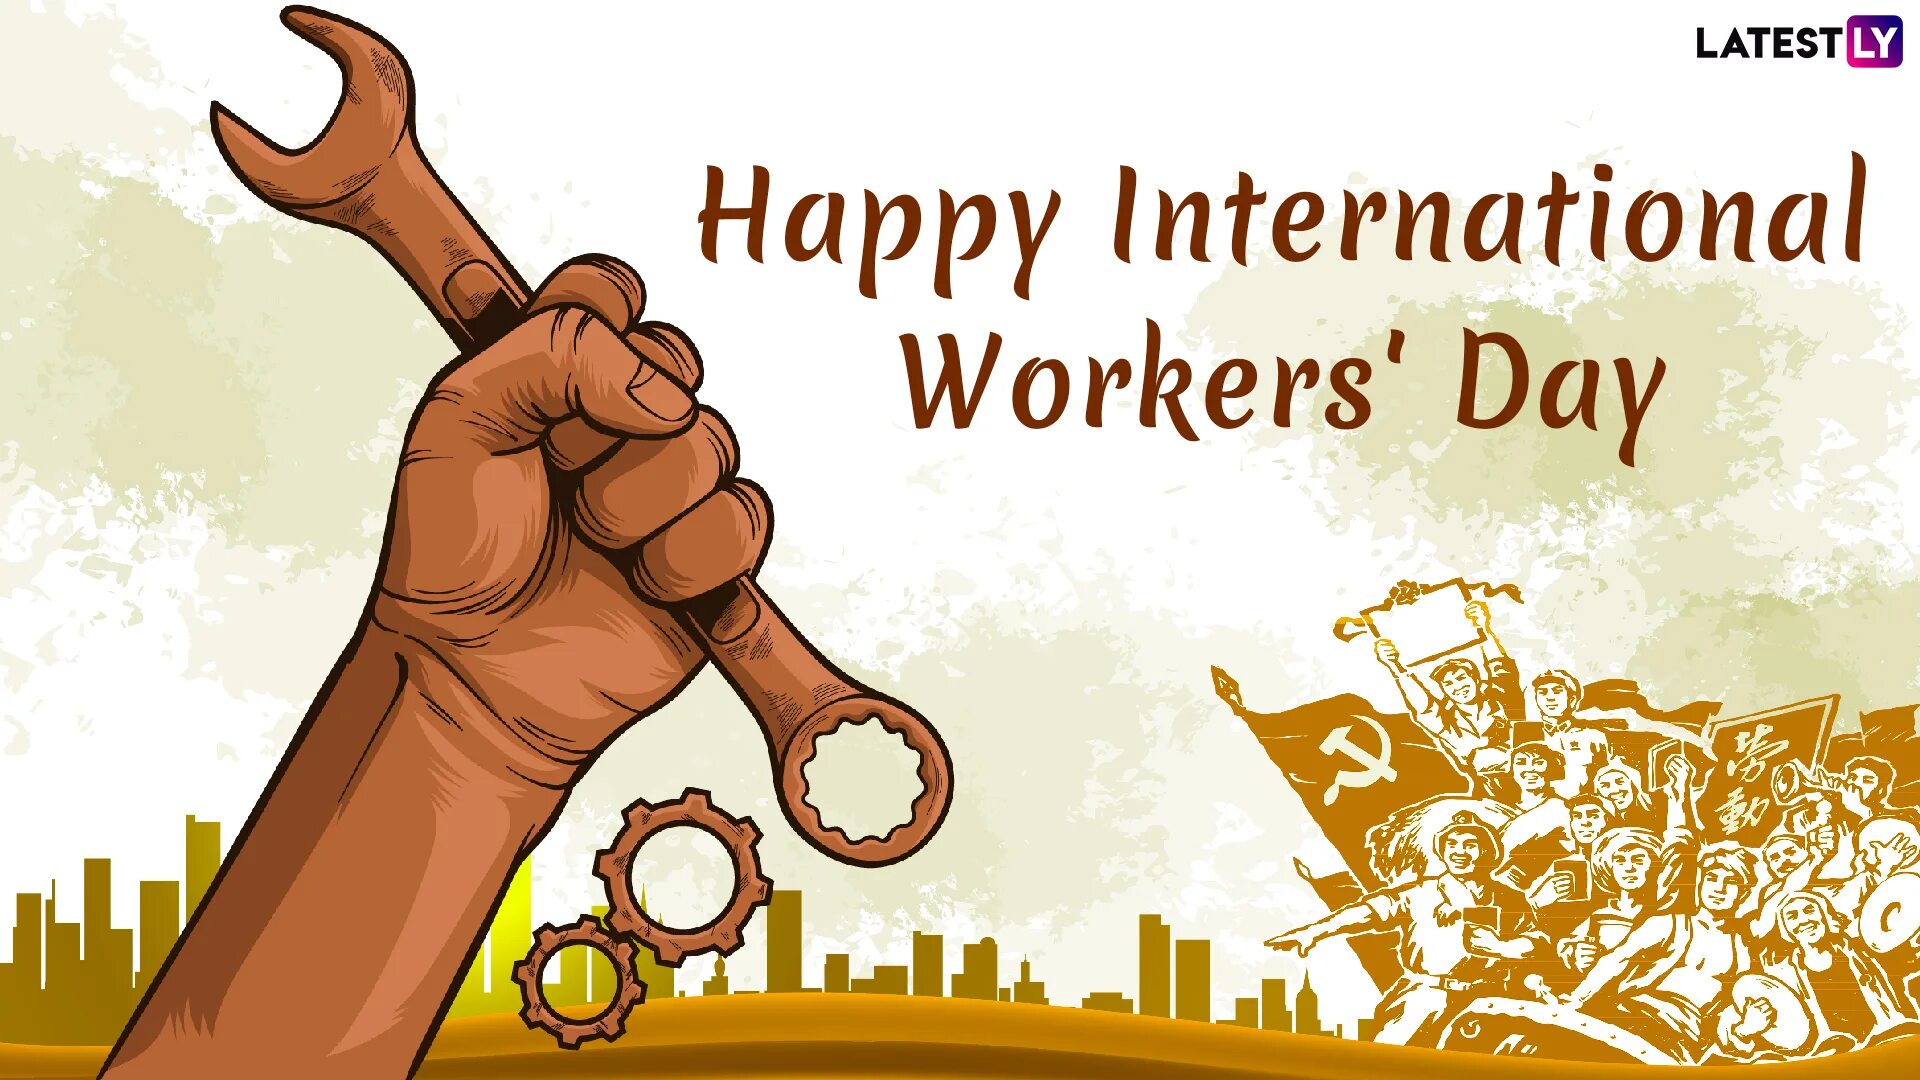 International workers' Day. International Labor Day. 1 May International workers' Day. 1 May Labor Day. May working days